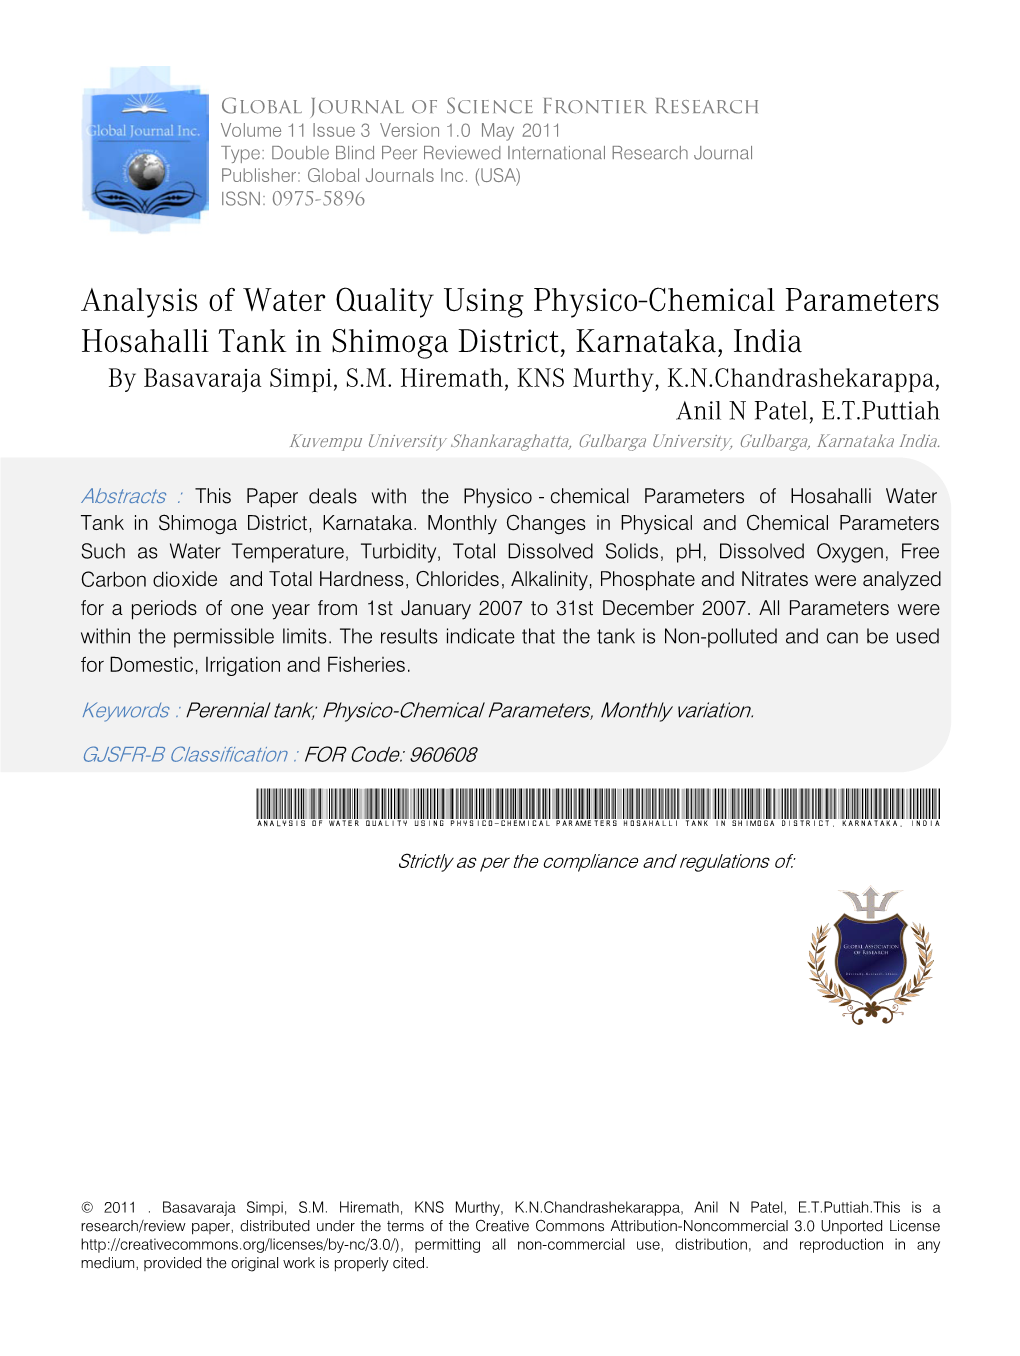 Analysis of Water Quality Using Physico-Chemical Parameters Hosahalli Tank in Shimoga District, Karnataka, India by Basavaraja Simpi, S.M